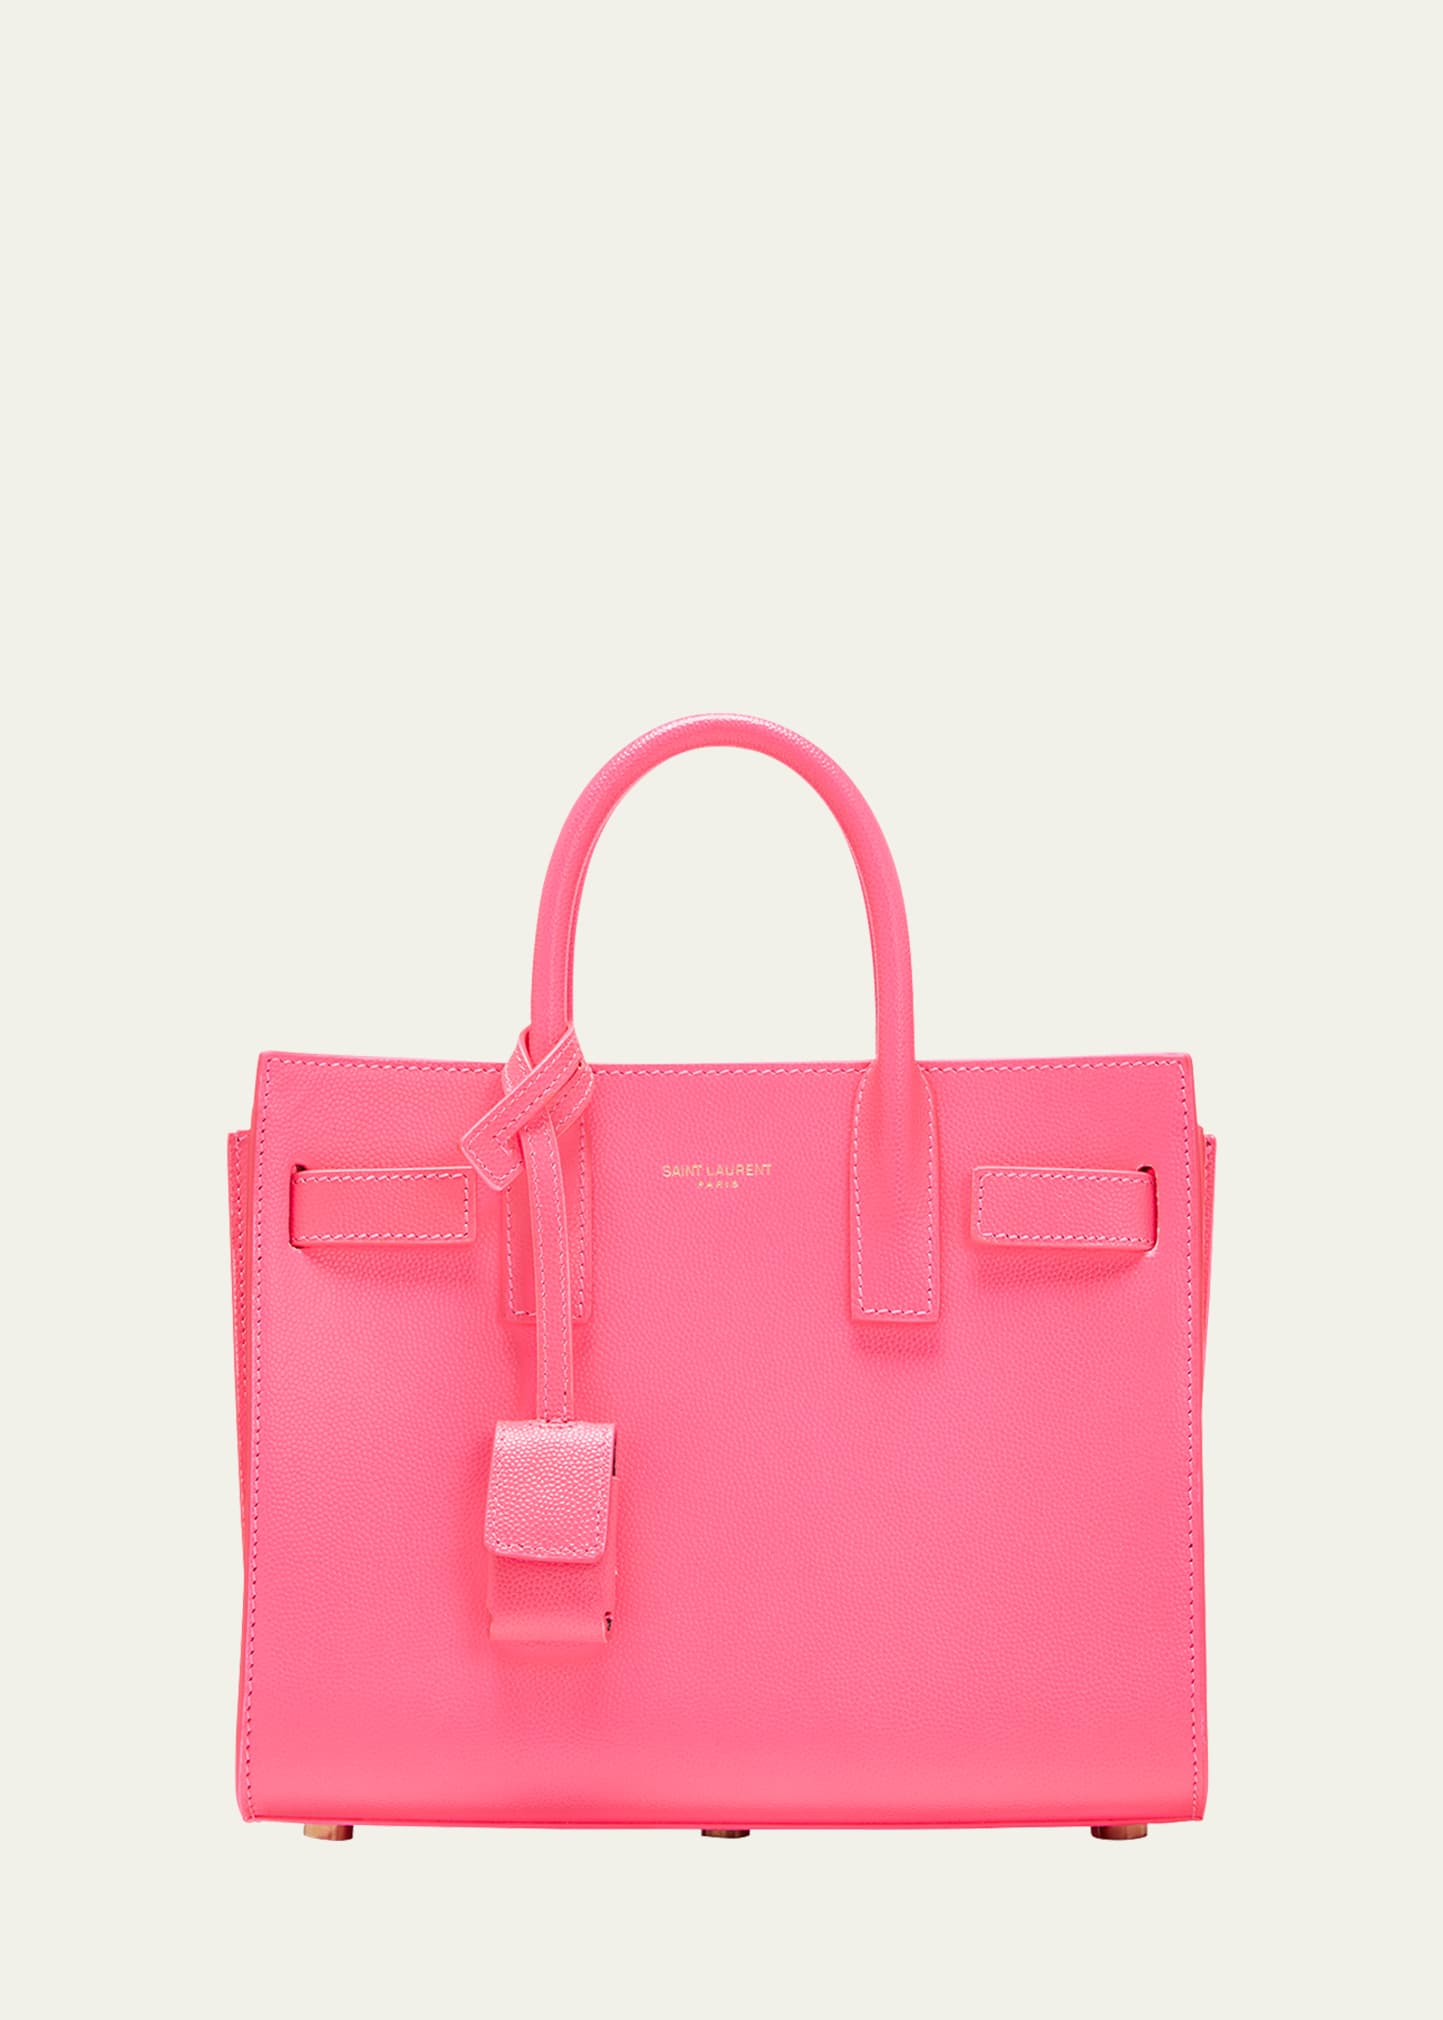 Saint Laurent Sac De Jour Nano Top-handle Bag In Bright Pink